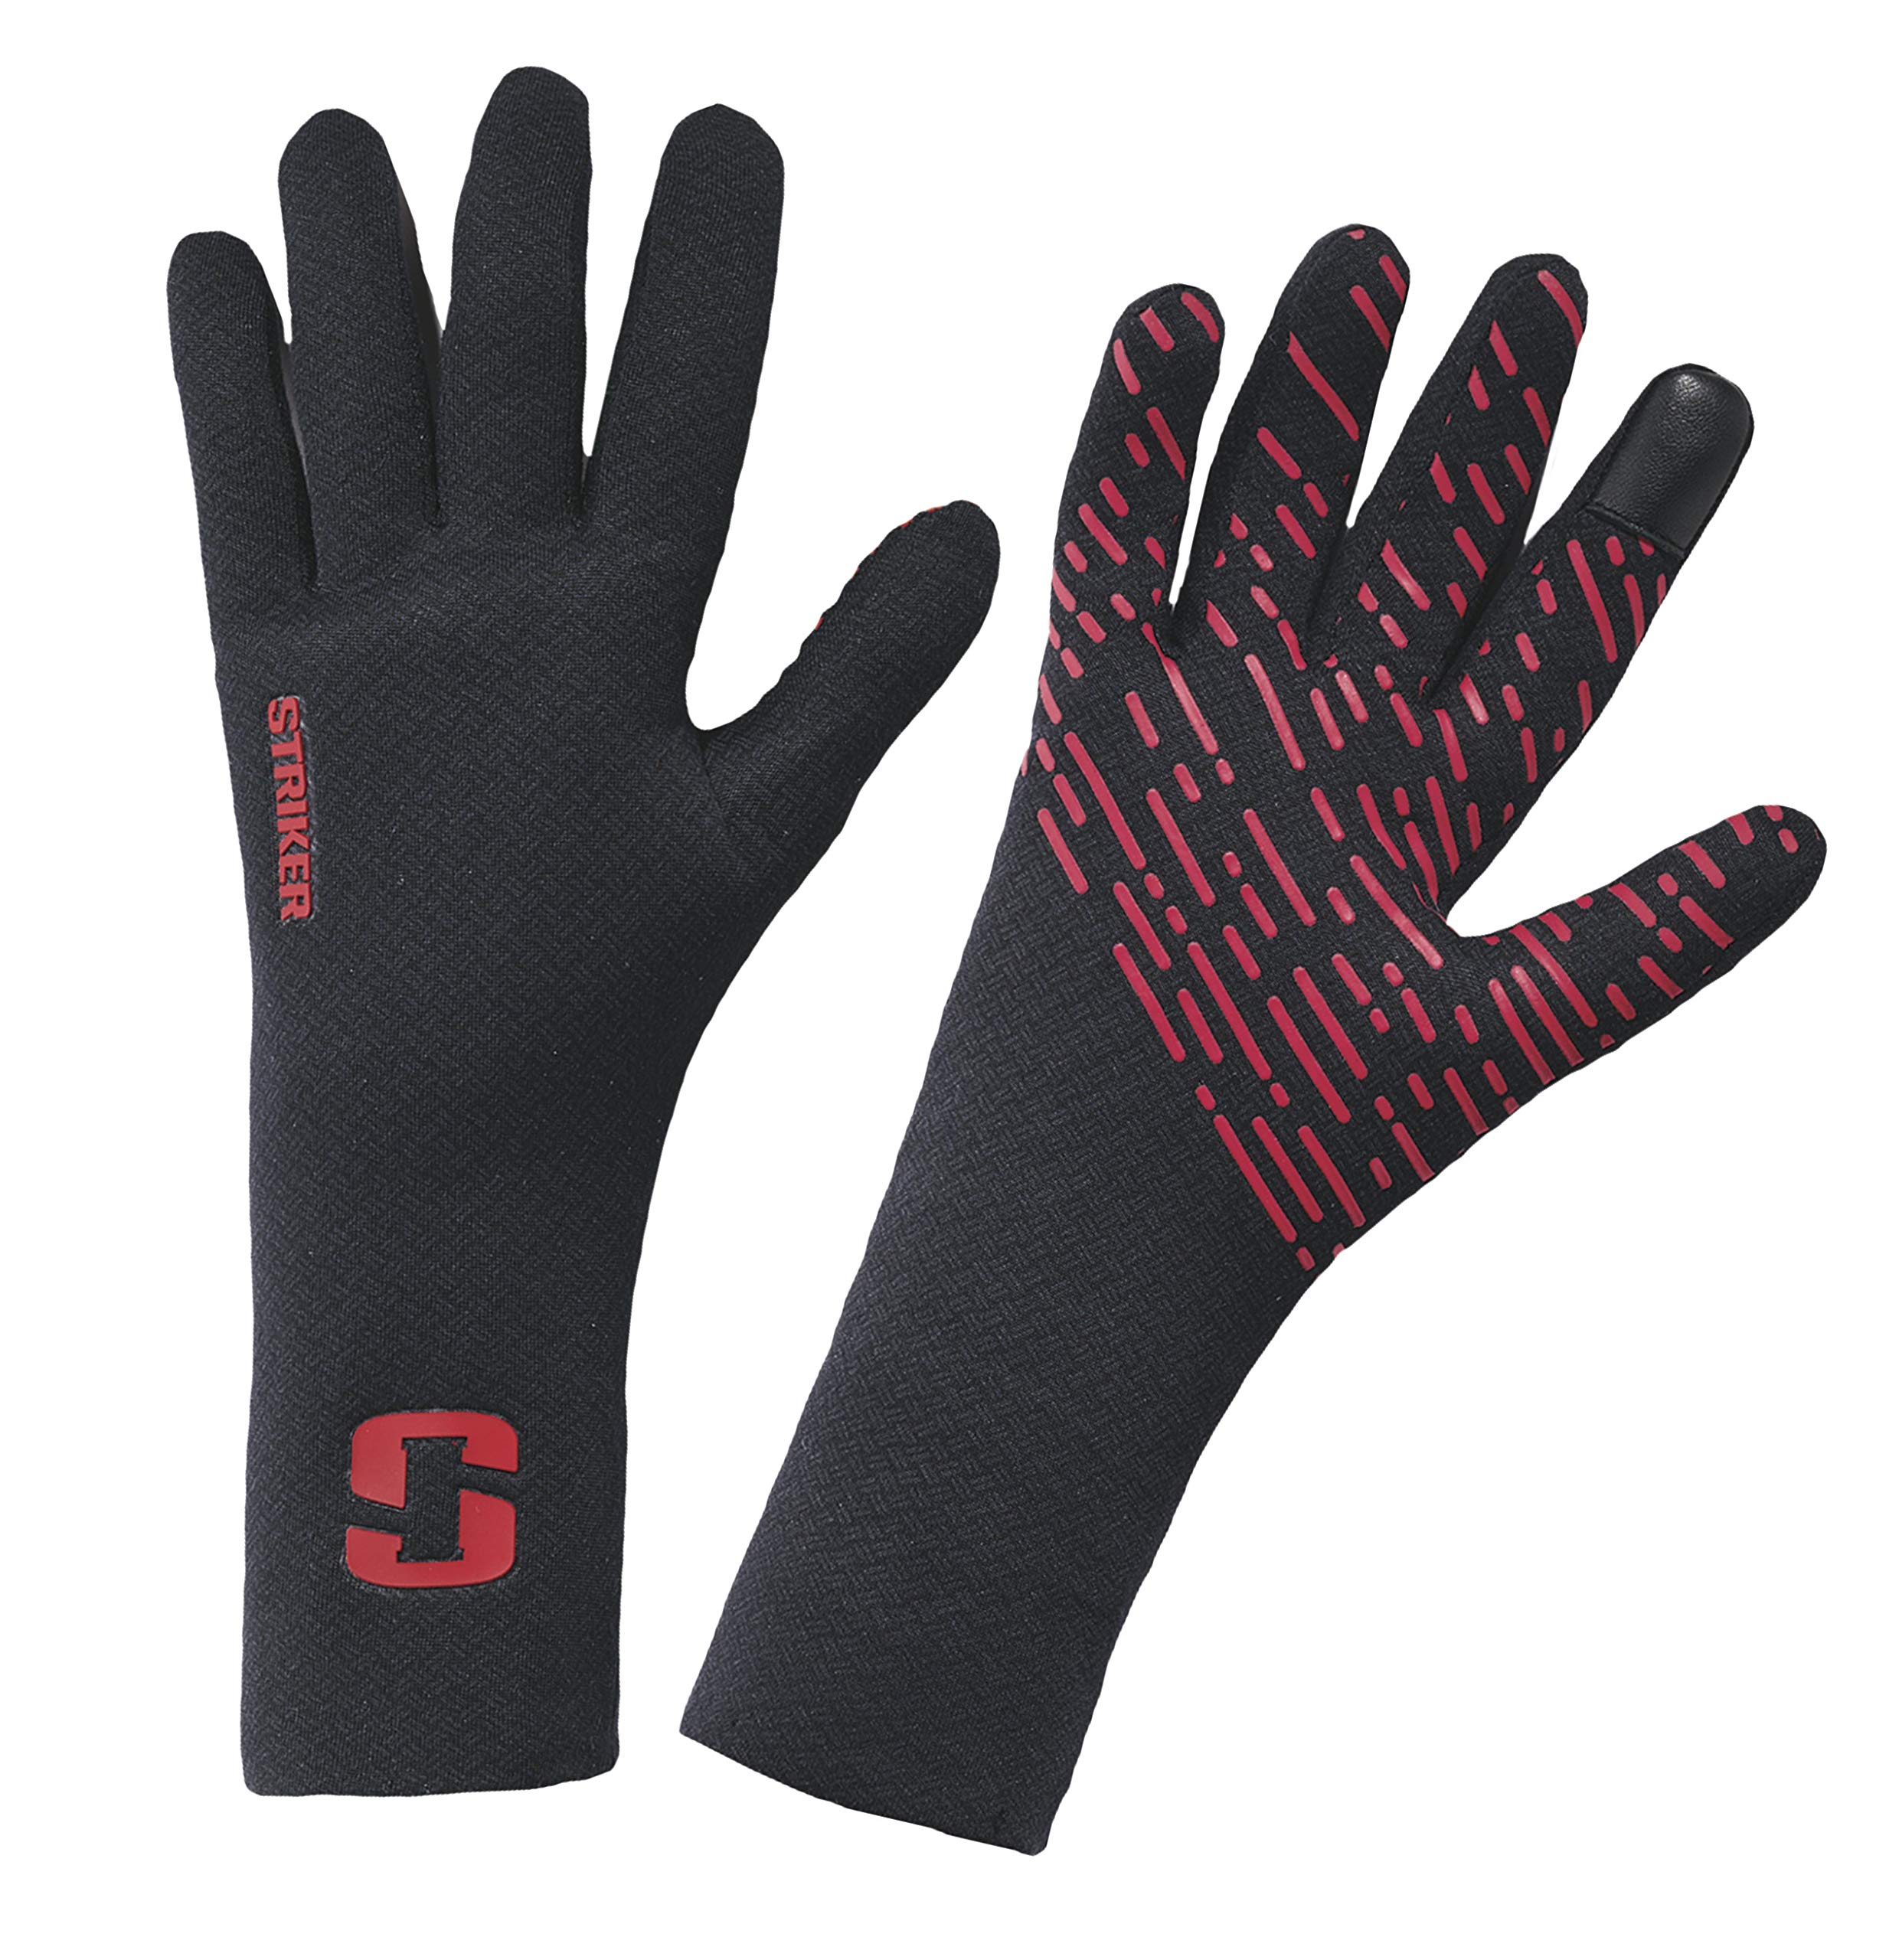 StrikerICE Men's Stealth Fishing Gloves, Waterproof Gloves with